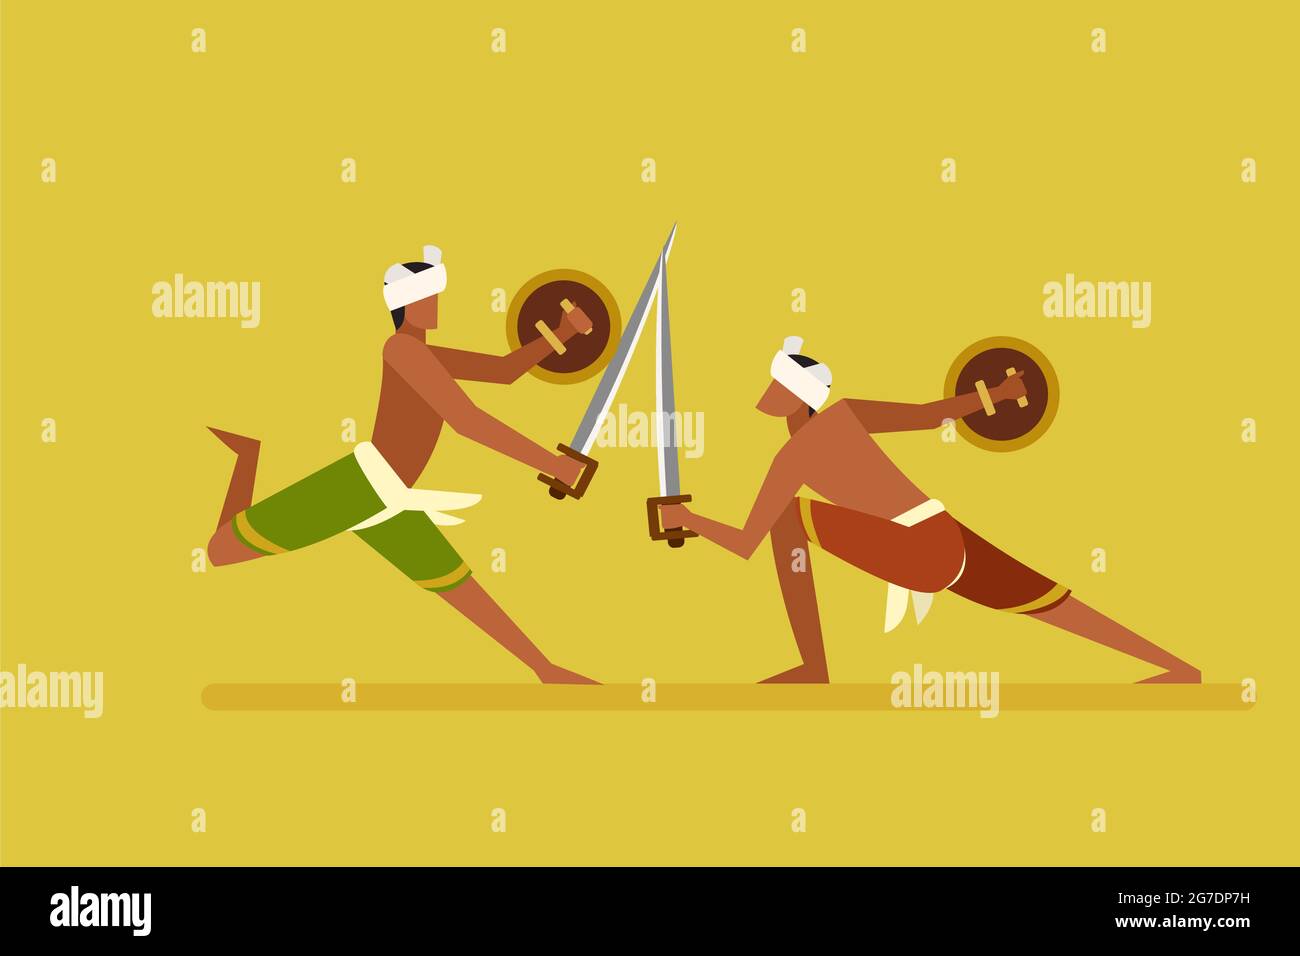 Illustration of People performing  South Indian martial art 'Kalaripayattu' Stock Vector